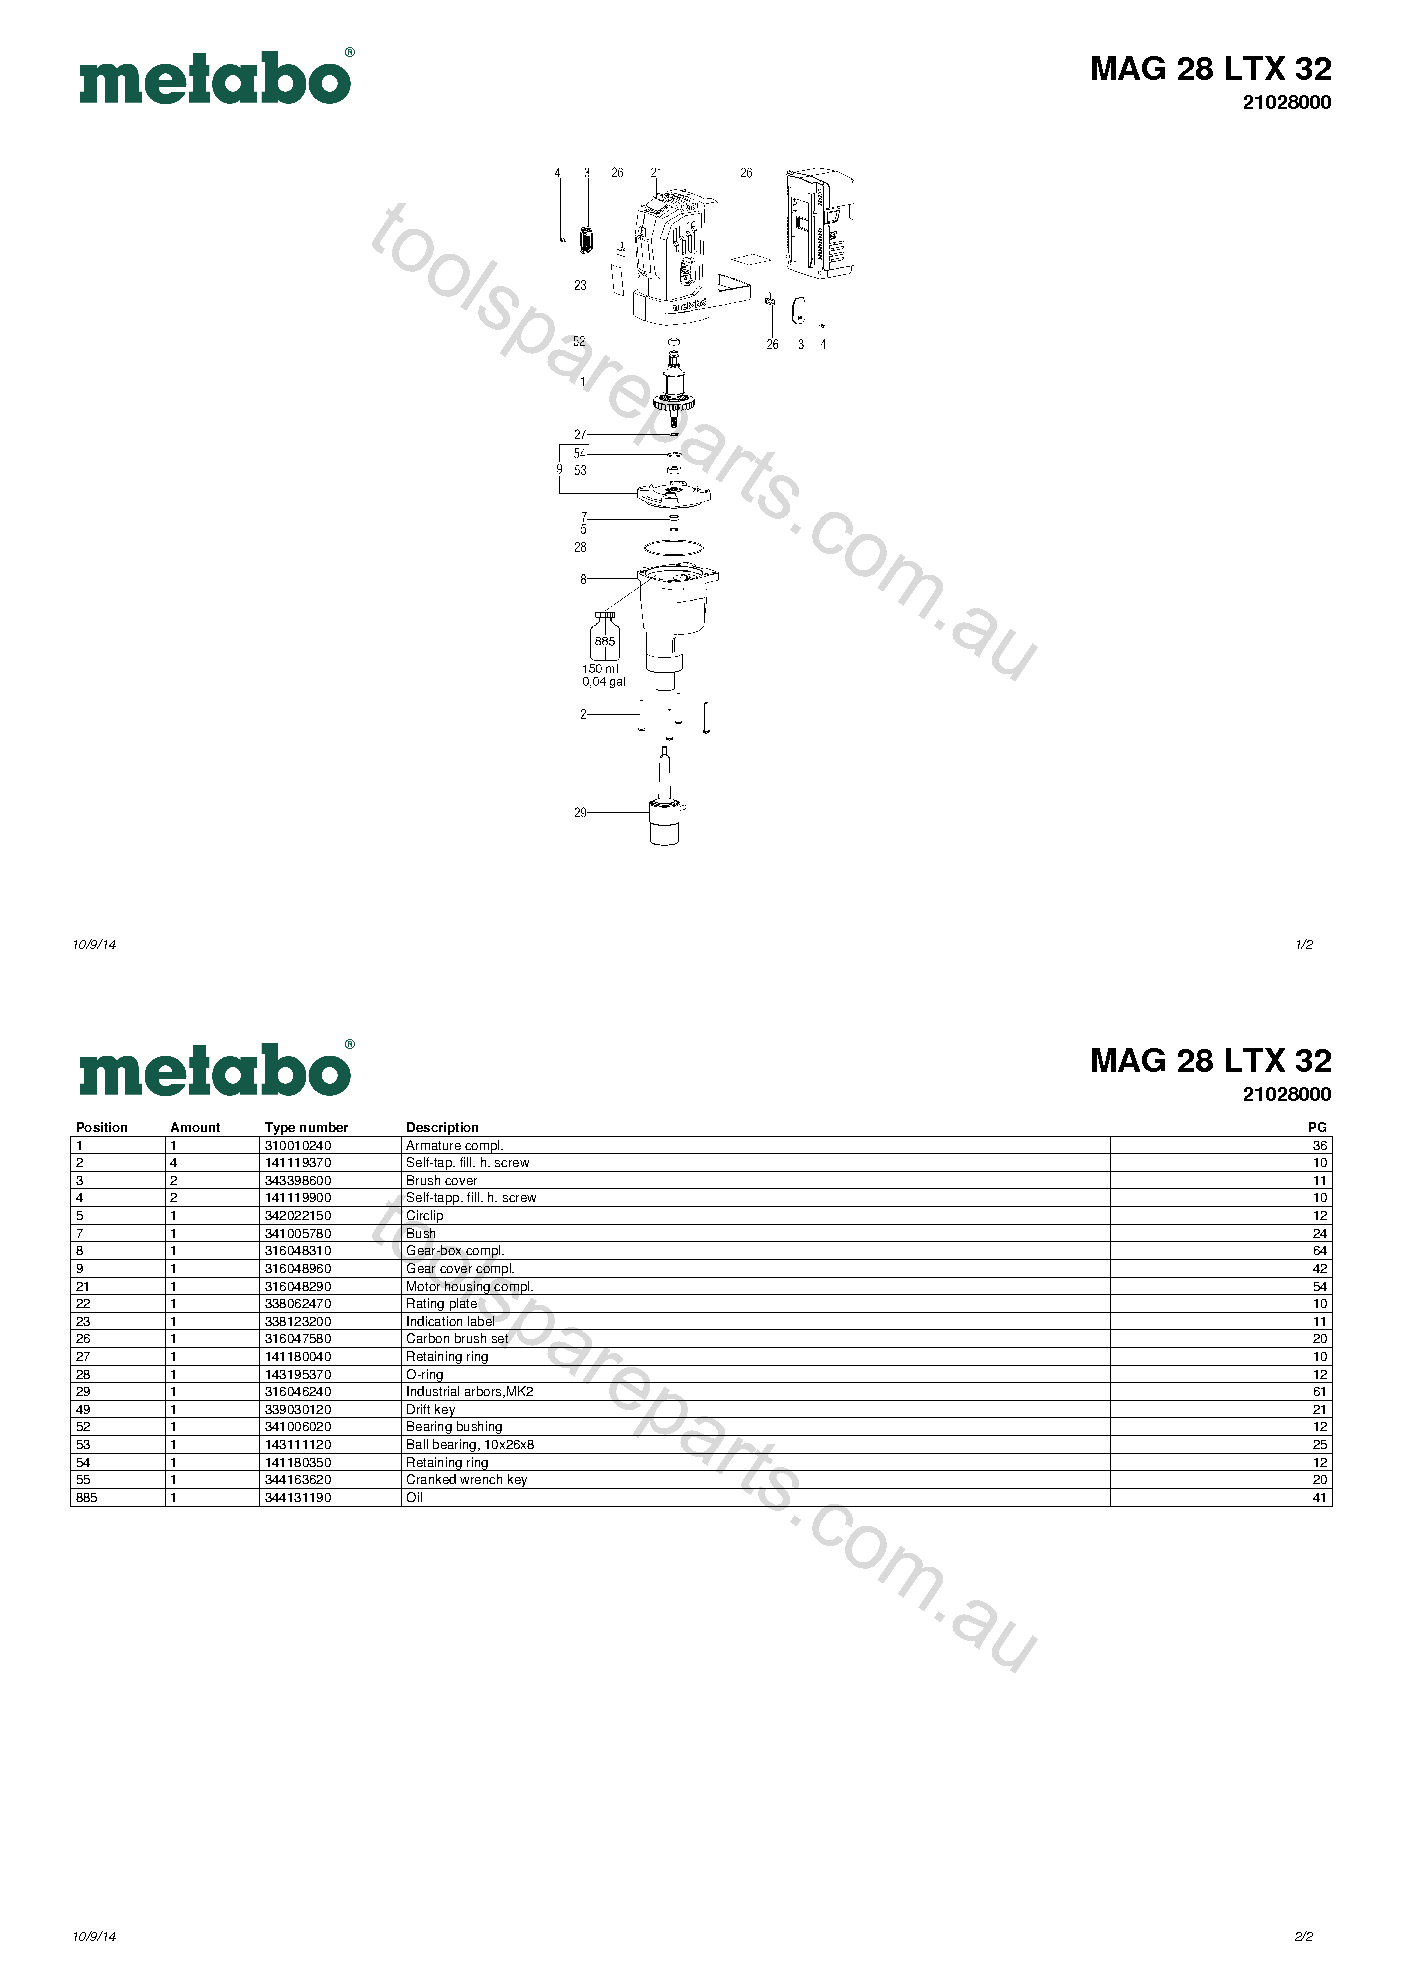 Metabo MAG 28 LTX 32 21028000  Diagram 1